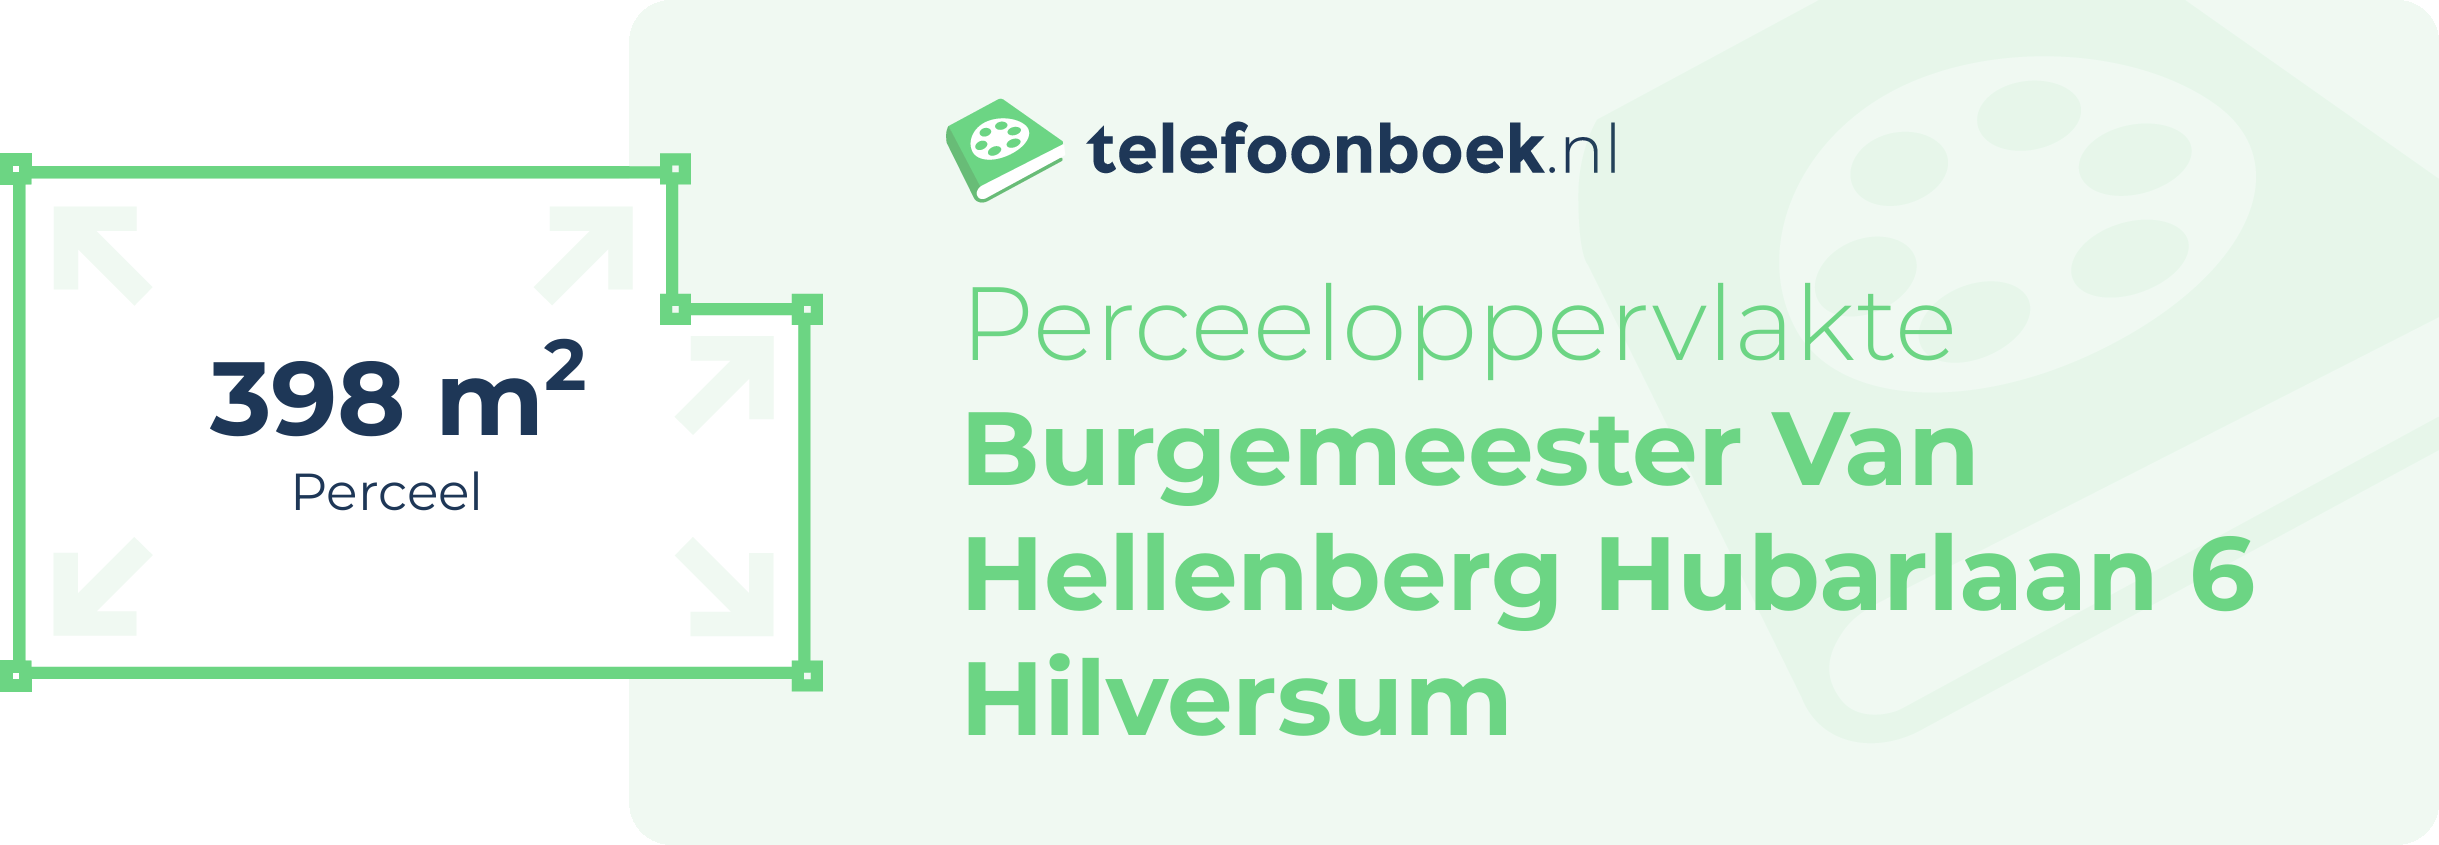 Perceeloppervlakte Burgemeester Van Hellenberg Hubarlaan 6 Hilversum